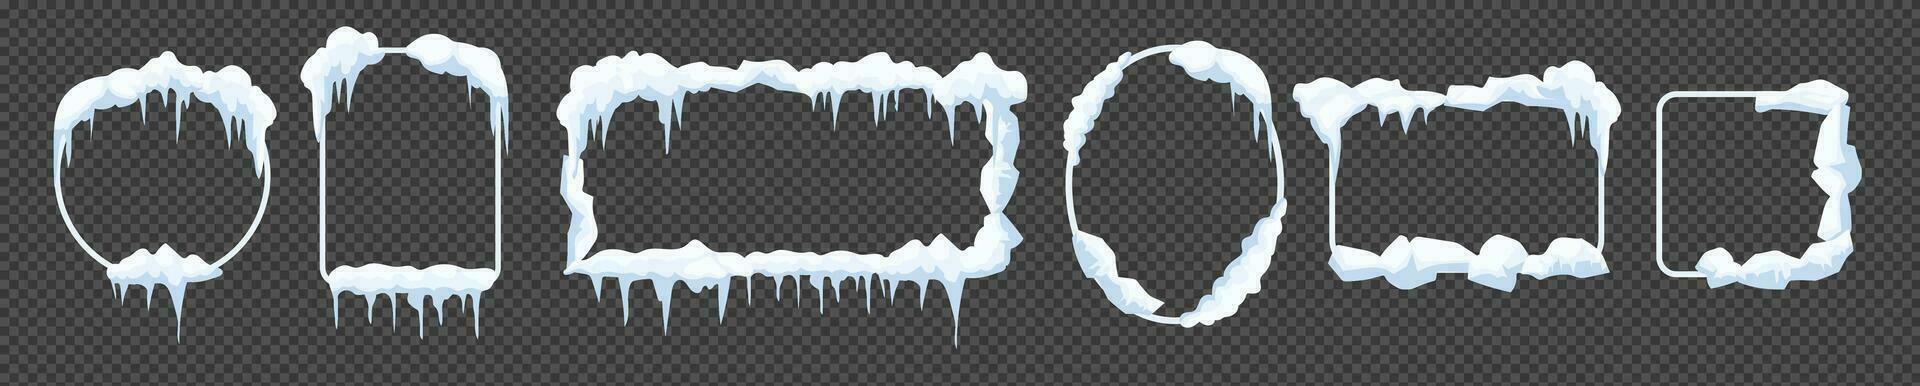 nieve carámbano marco vector diseño. hielo dibujos animados frontera